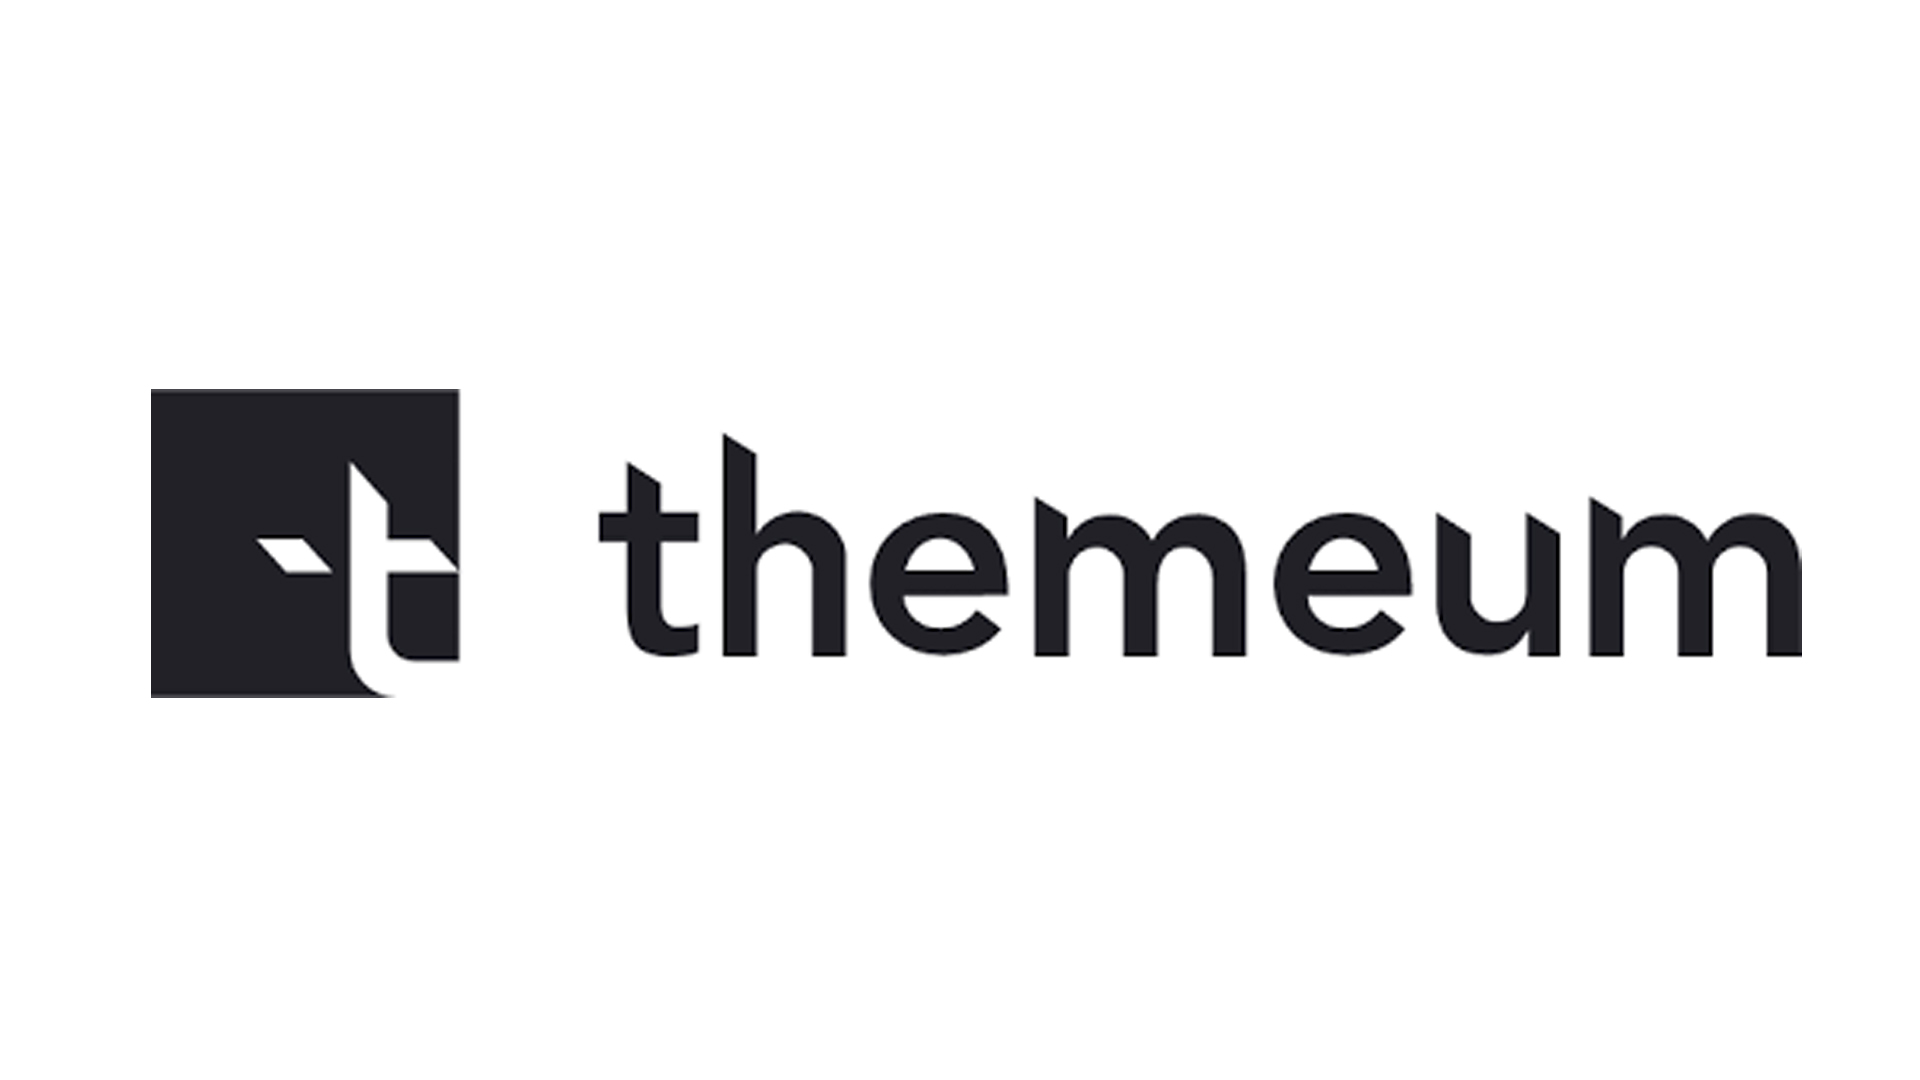 Themeum logo